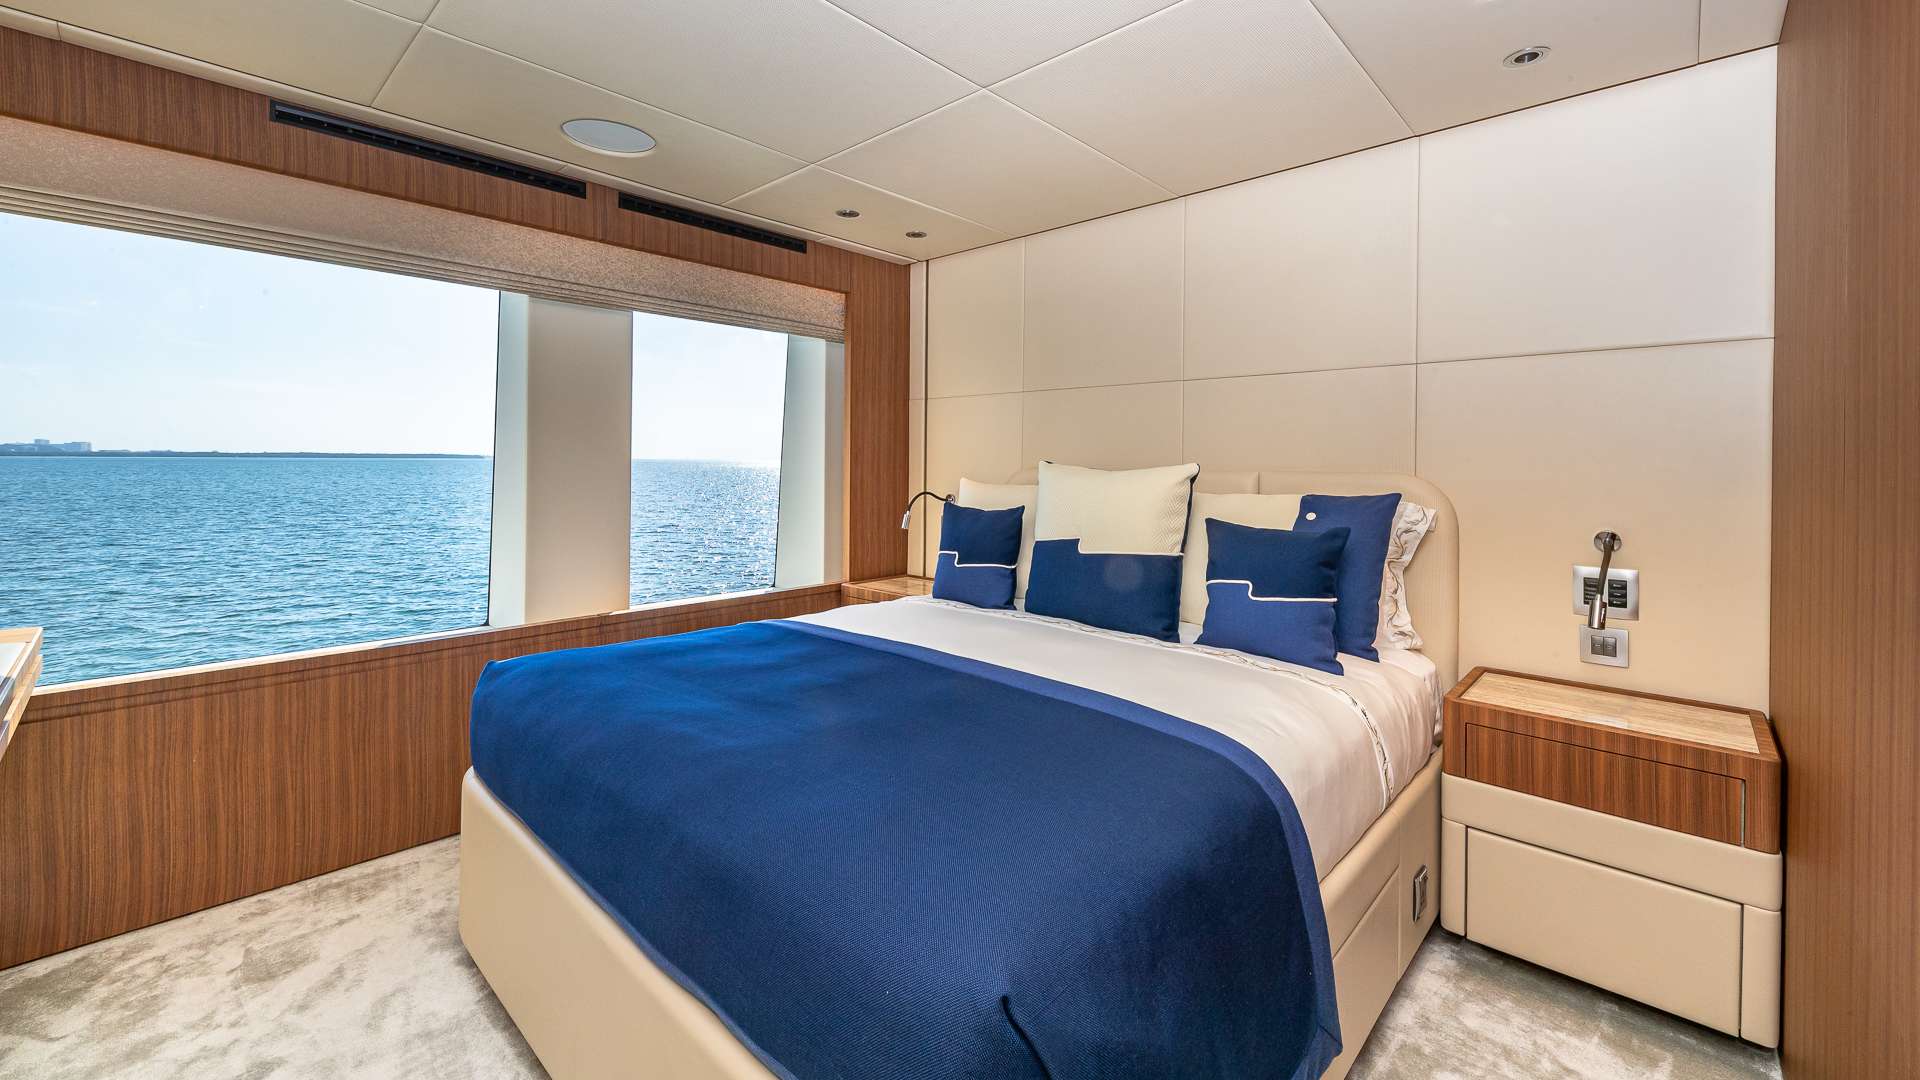 RISING DAWN Yacht Charter - Guest Cabin